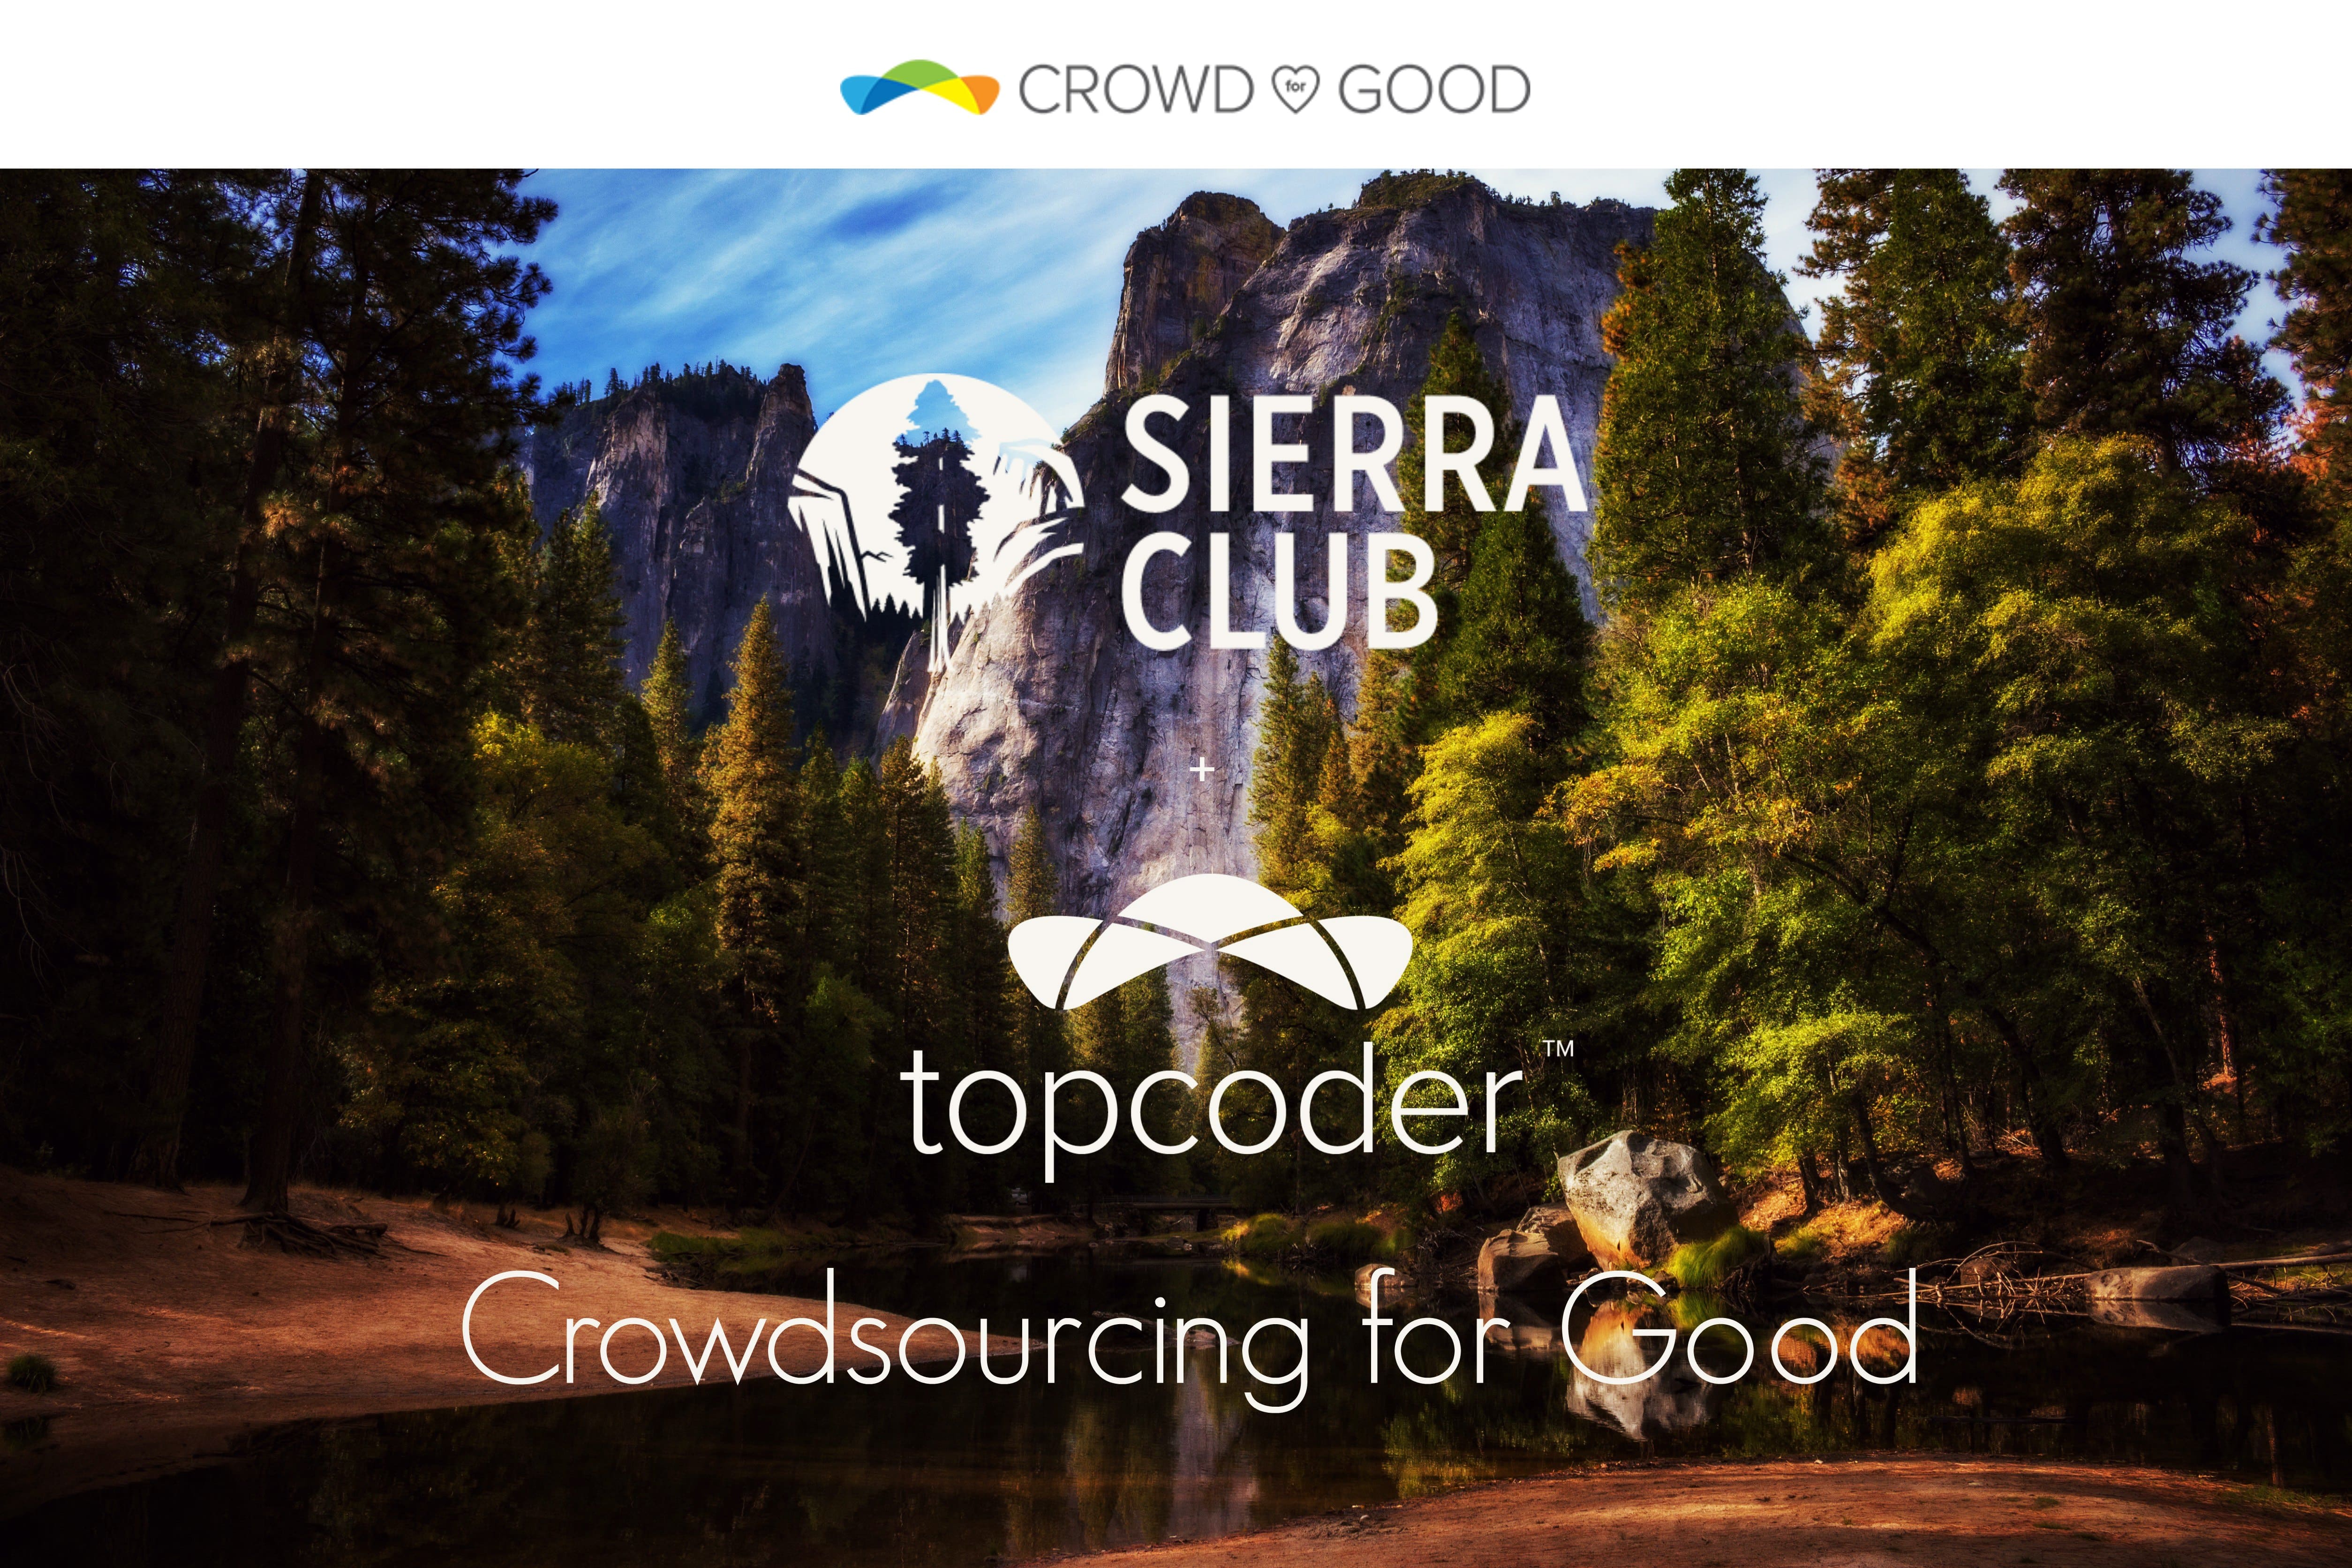 Sierra_Club_Crowd_For_Good_Blog_header-min